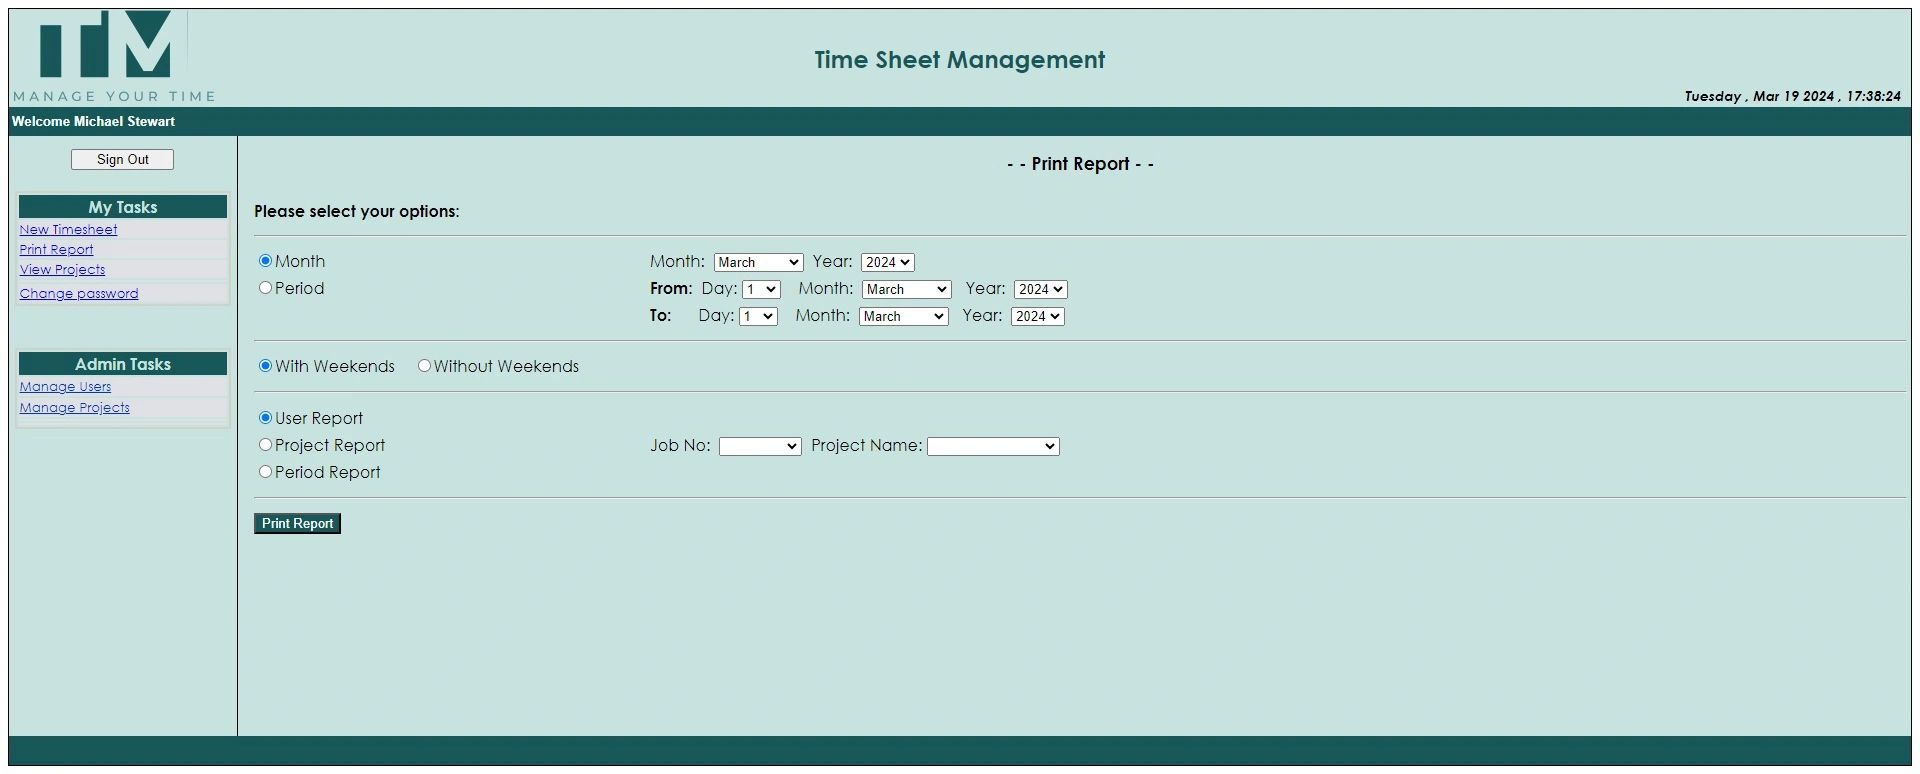 Time sheet Management - Print Report